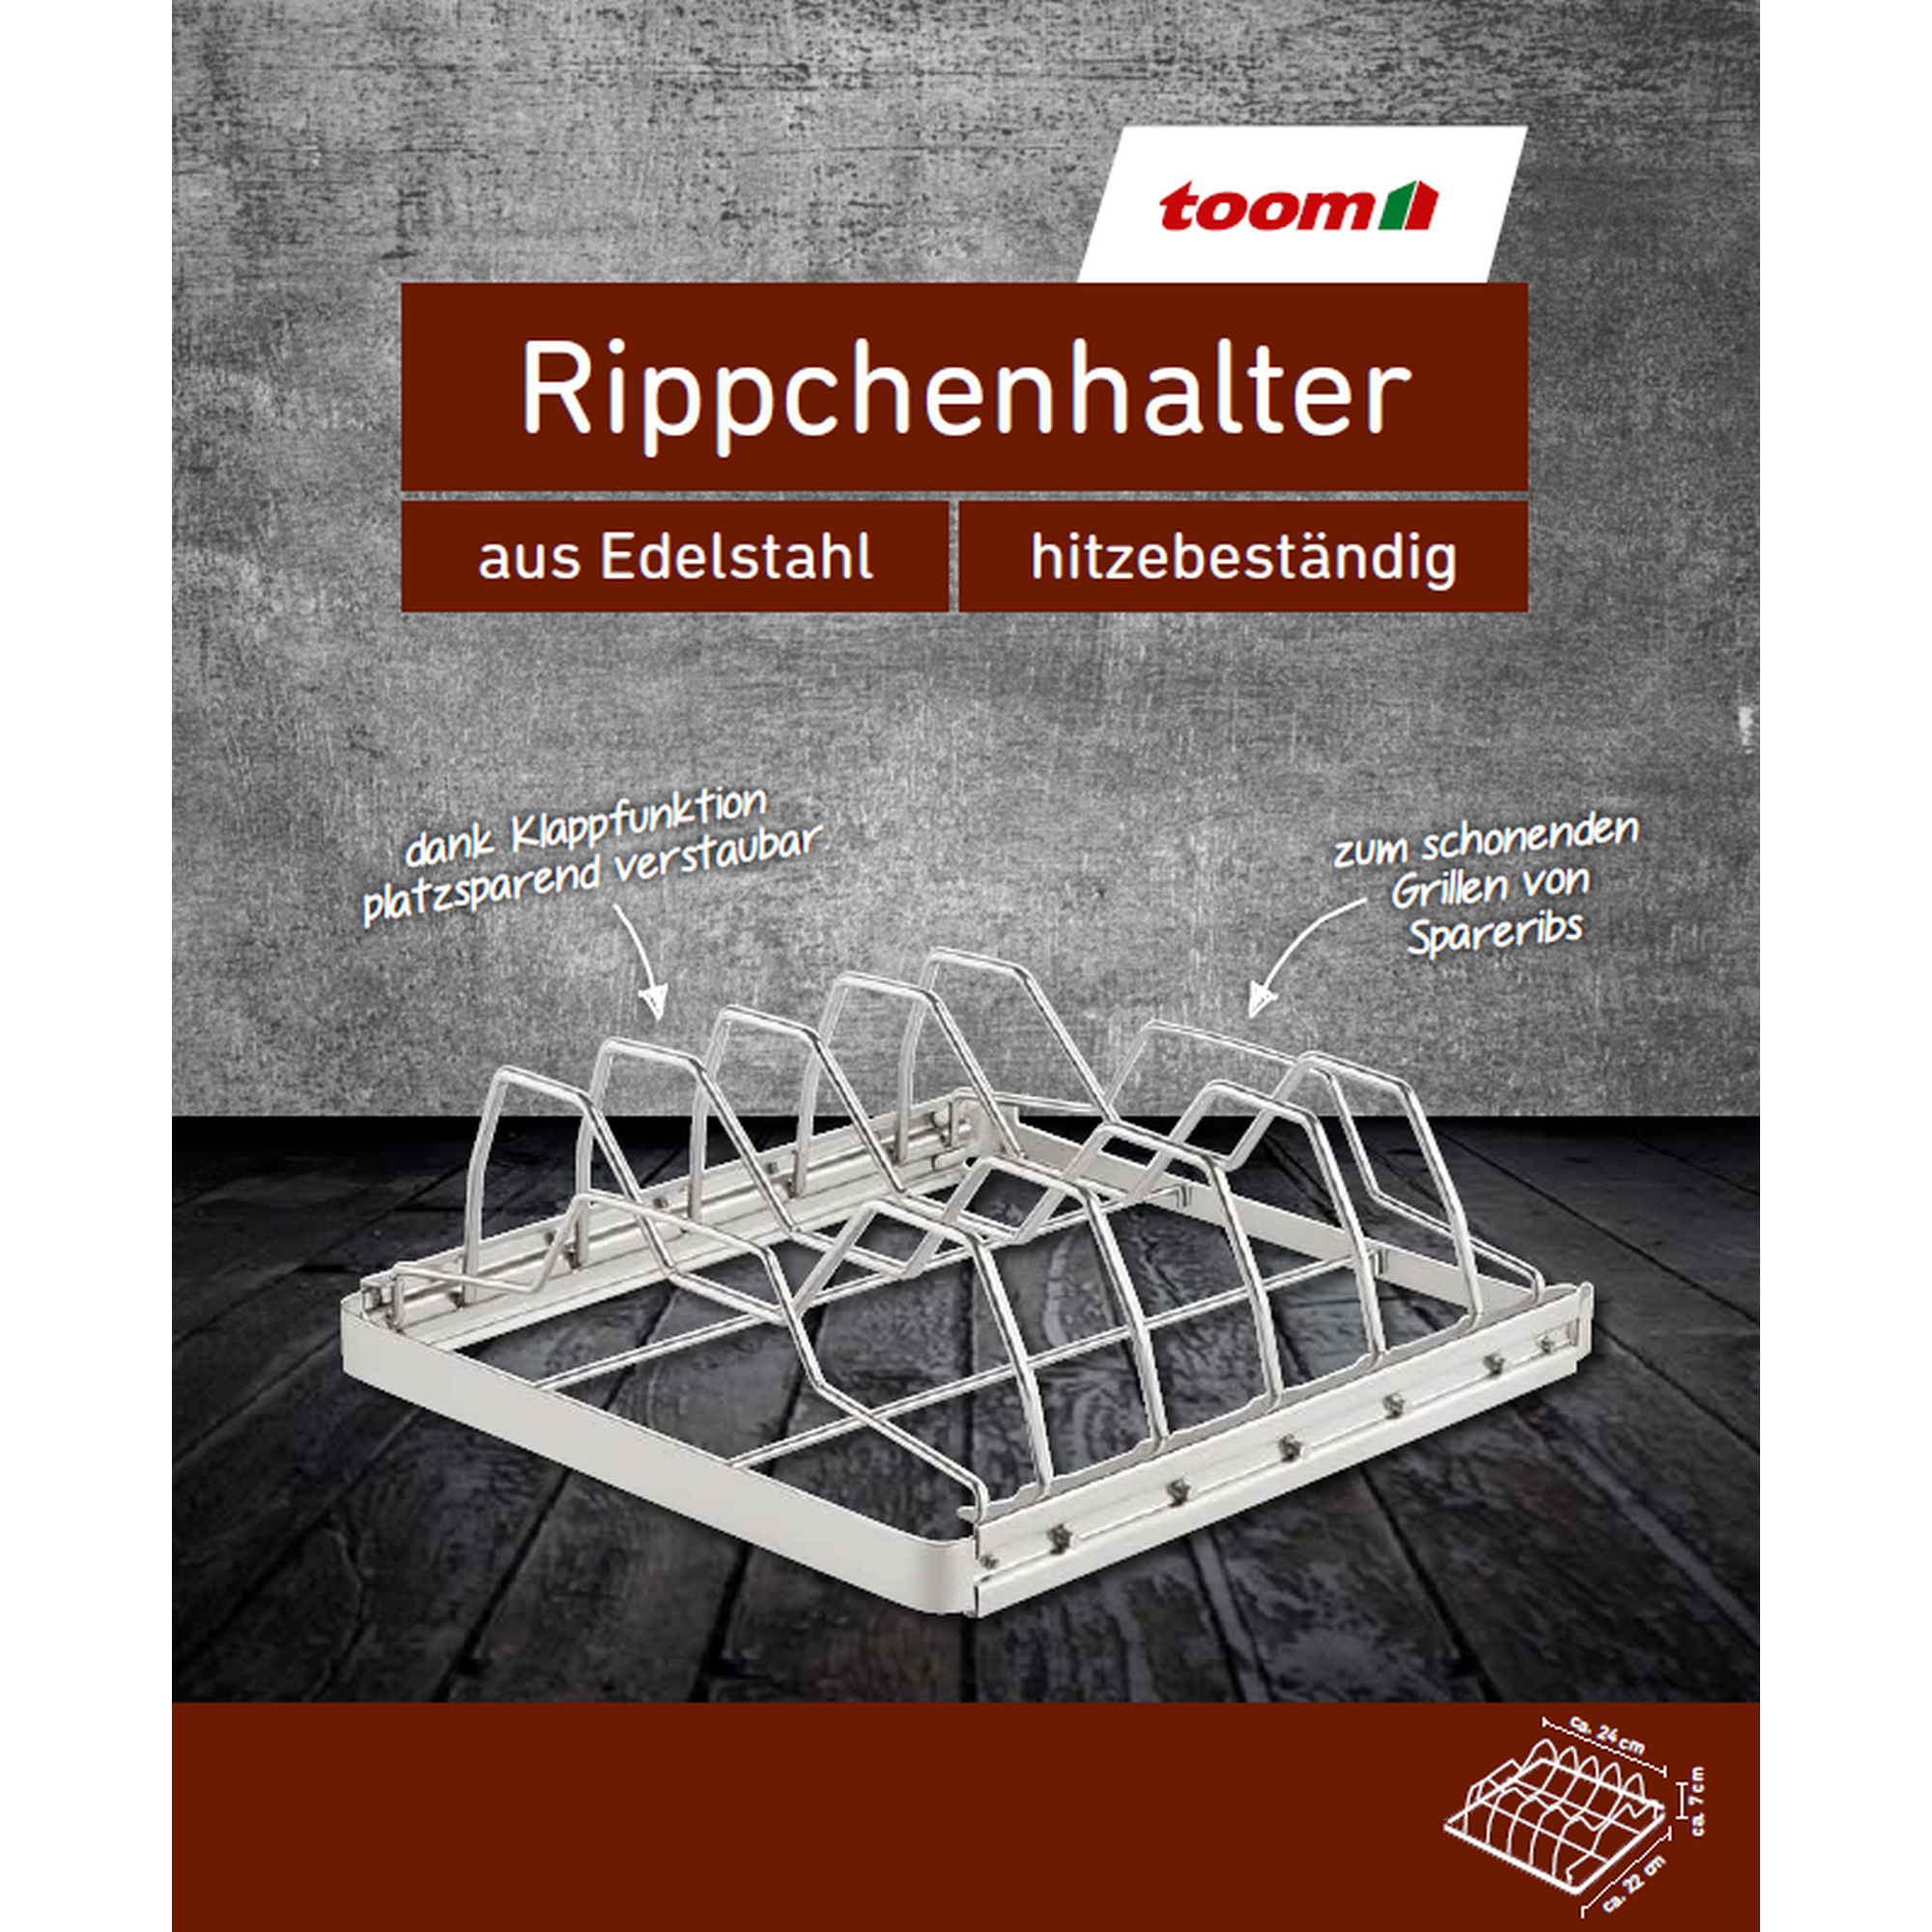 Rippchenhalter Edelstahl 22 x 24 cm + product picture